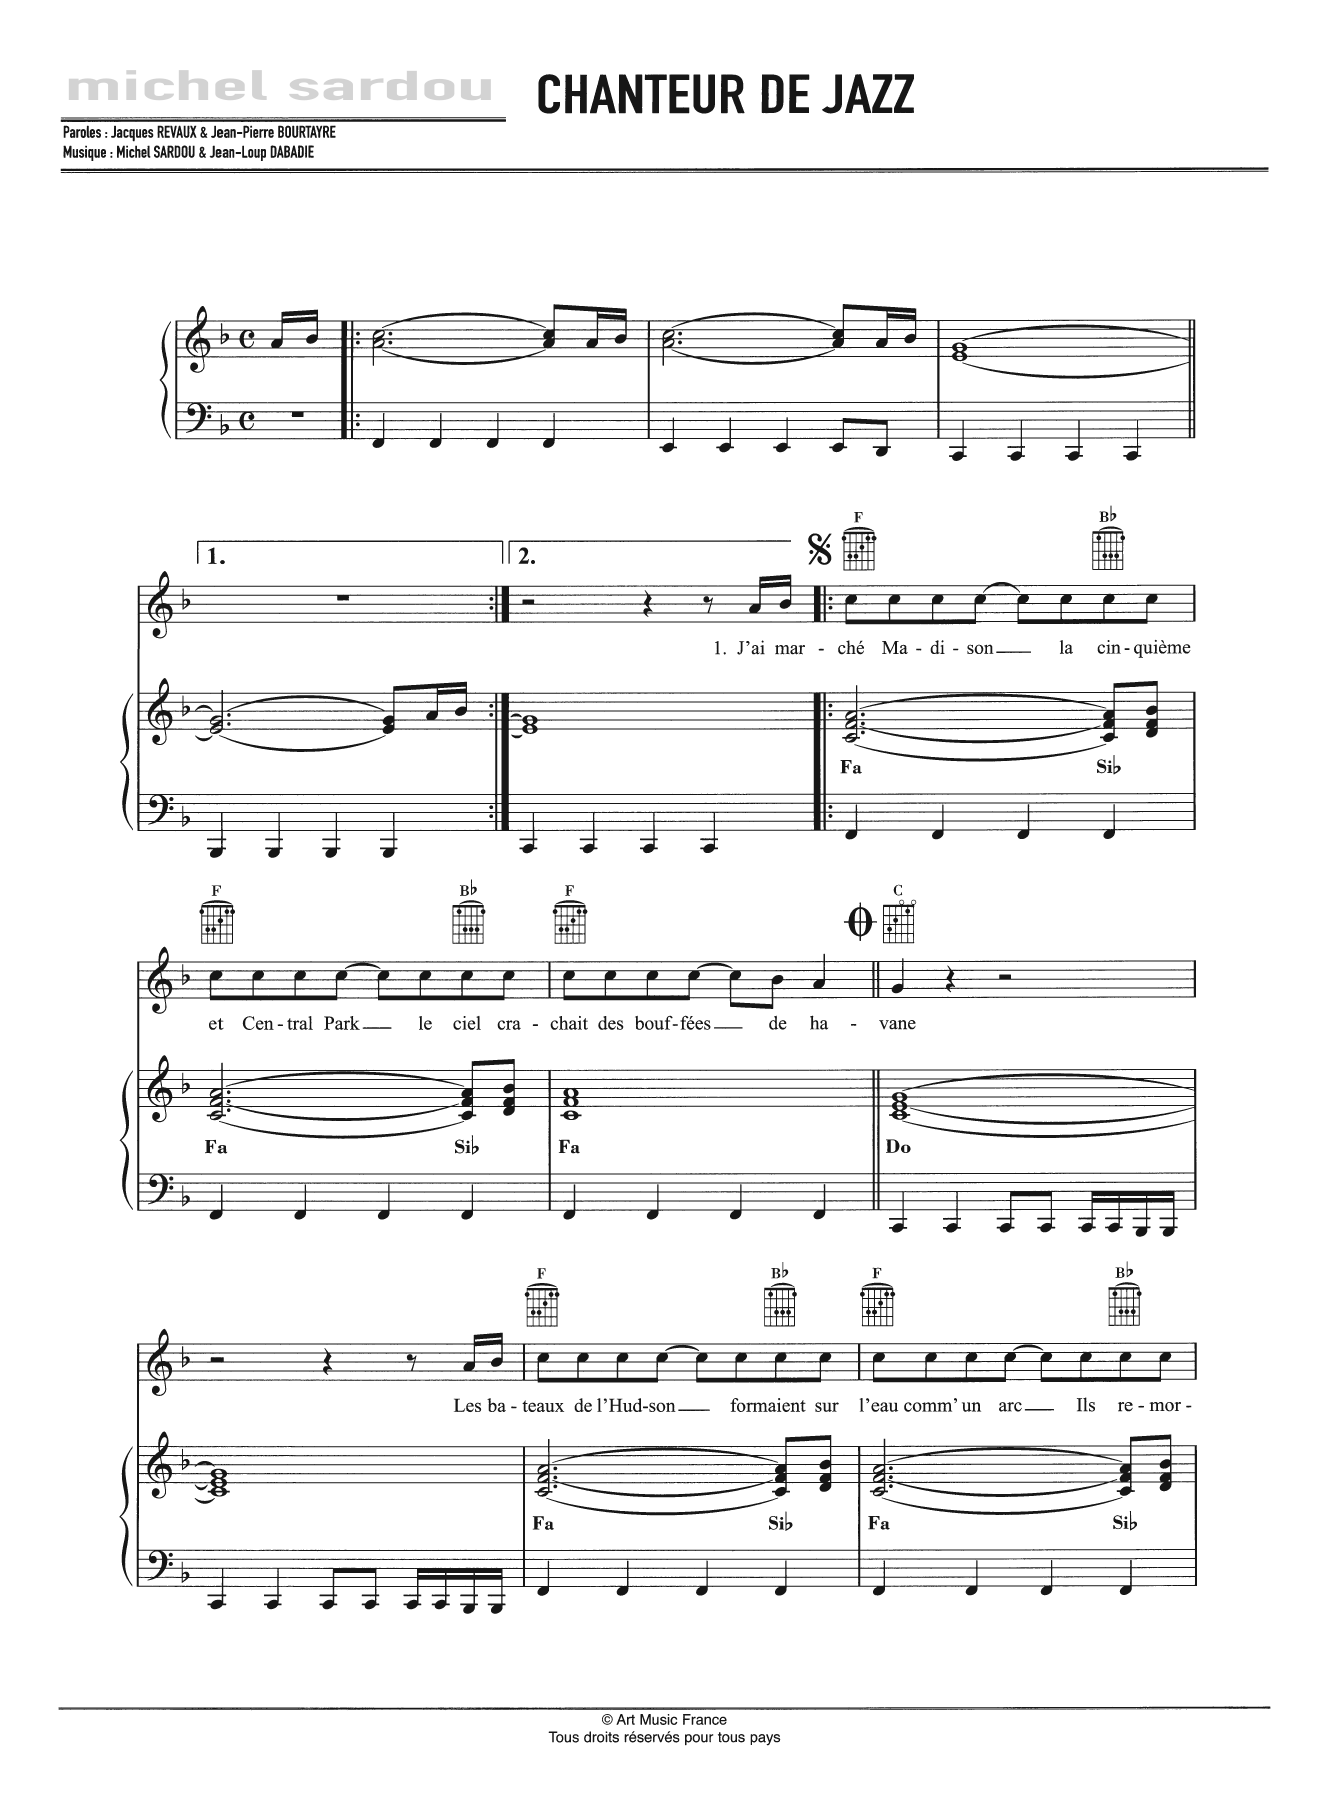 Michel Sardou Chanteur De Jazz Sheet Music Notes & Chords for Piano, Vocal & Guitar - Download or Print PDF